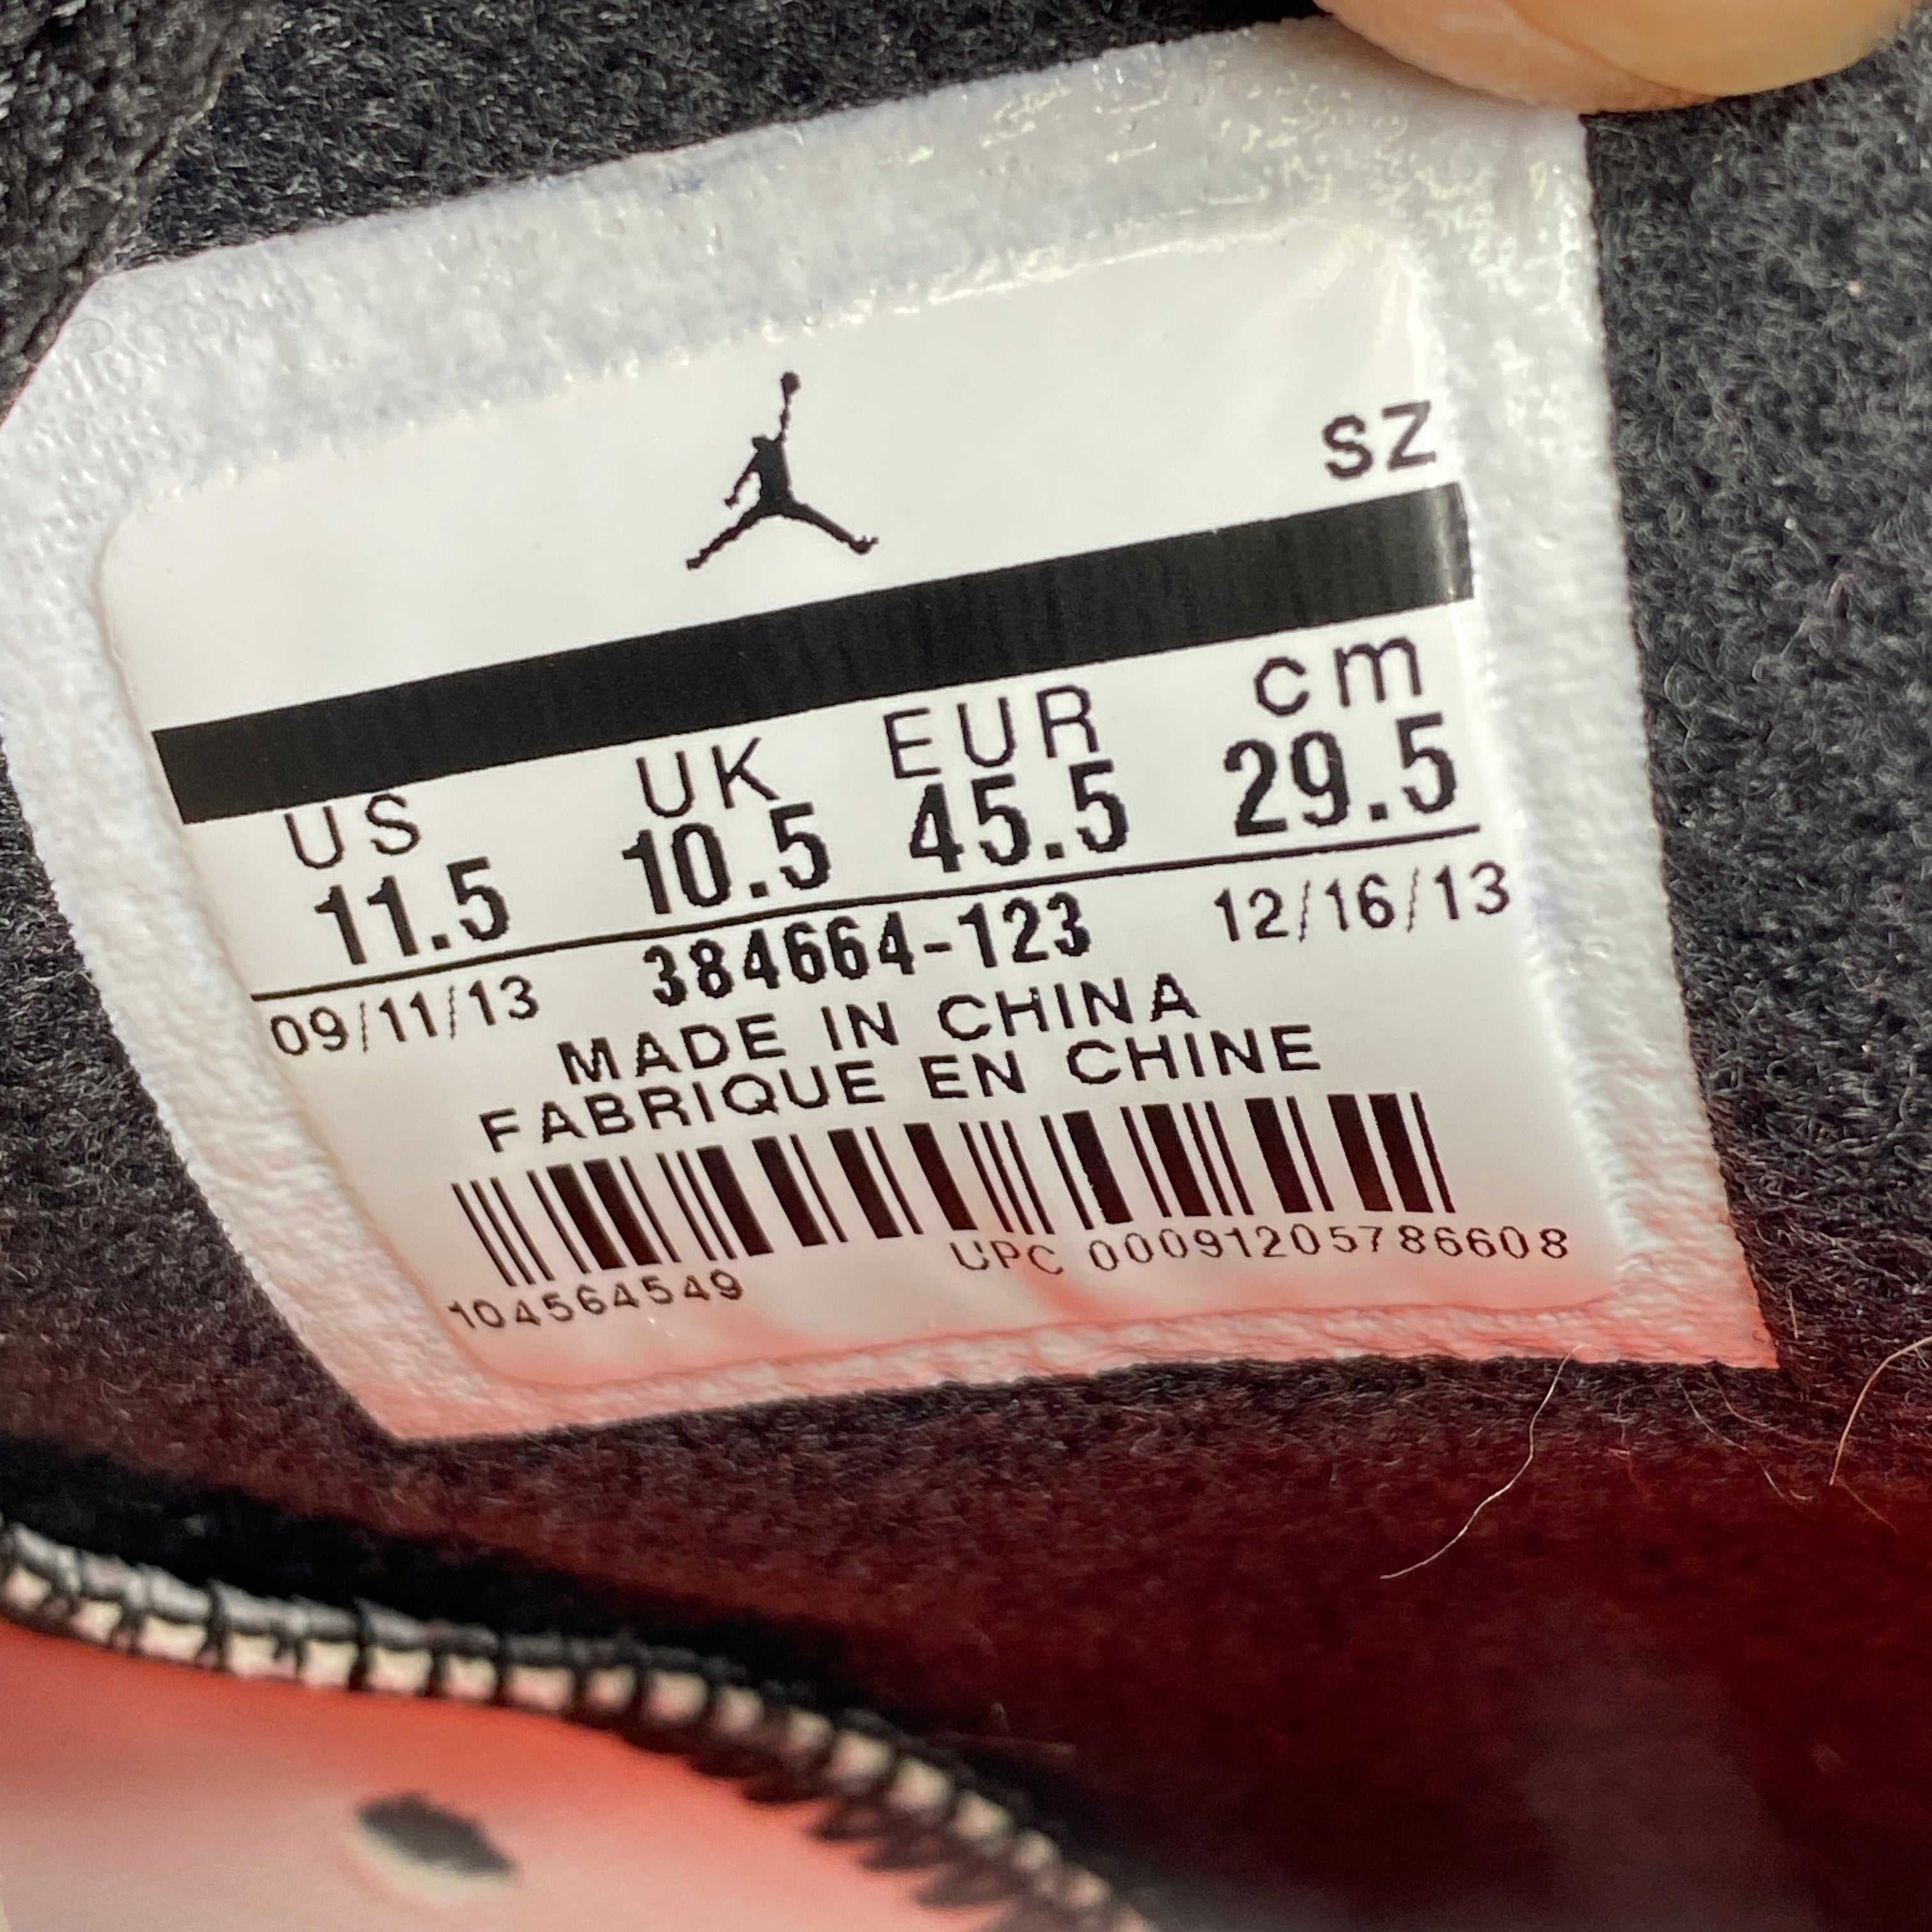 Air Jordan 6 Retro &quot;White Infrared&quot; 2014 New Size 11.5